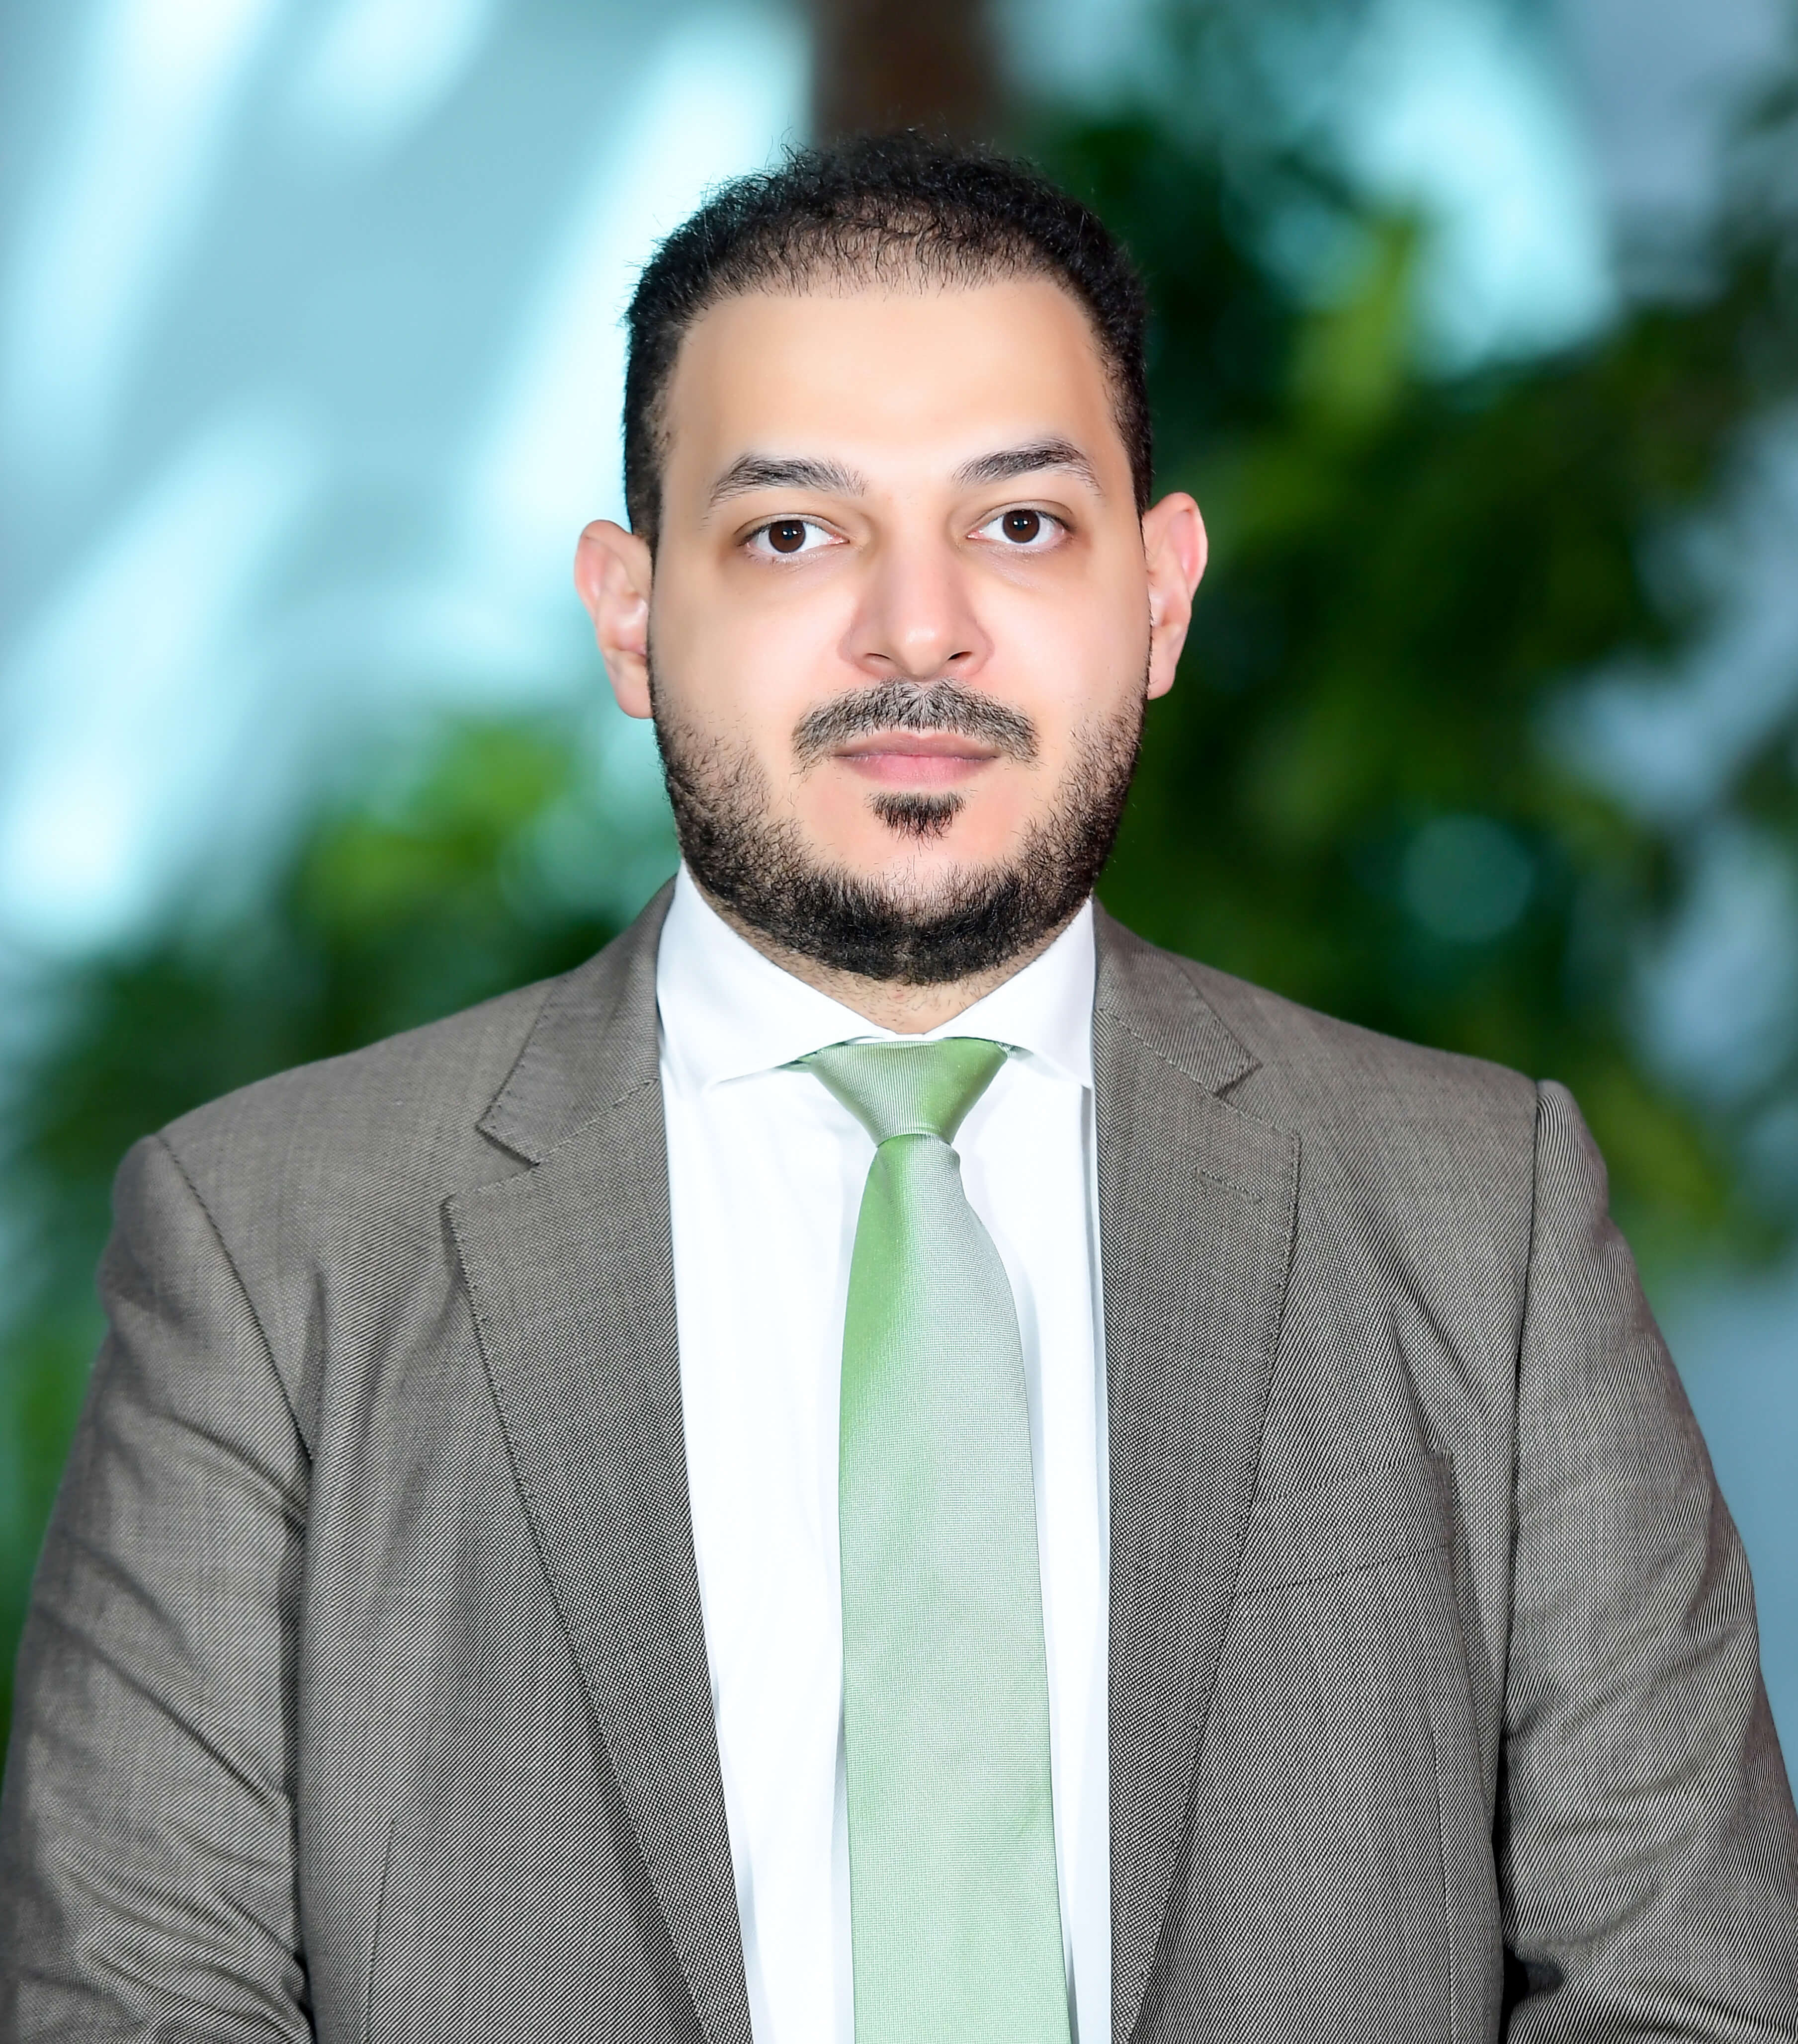 Dr. Emad W. Al Shalabi